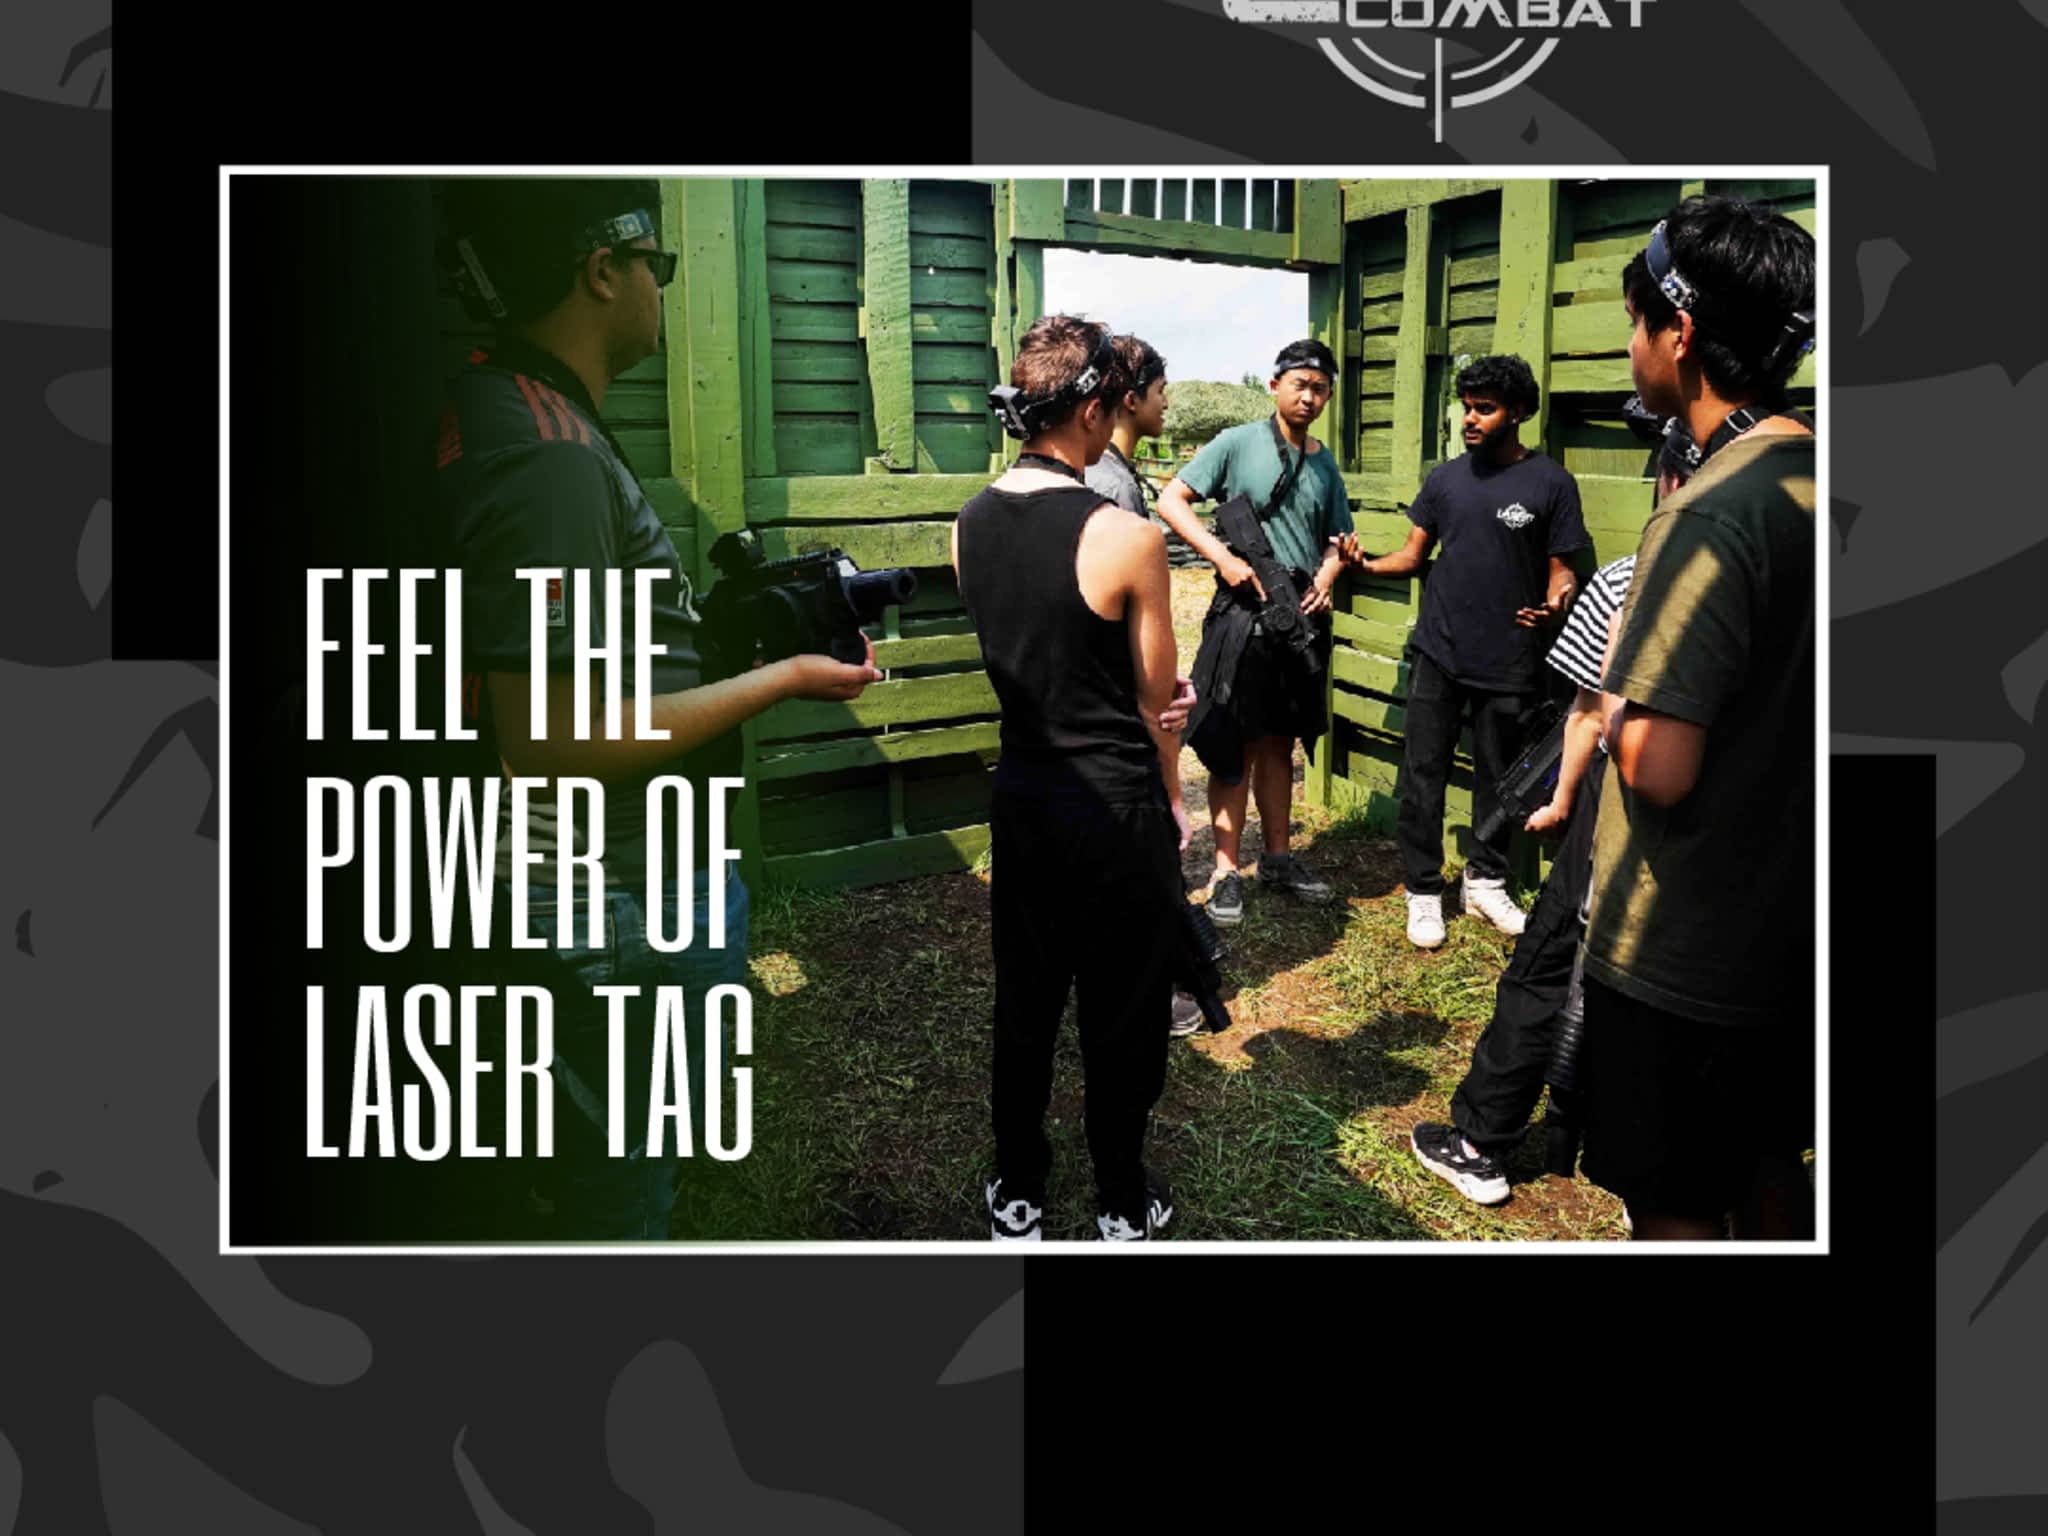 photo Laser Combat GTA